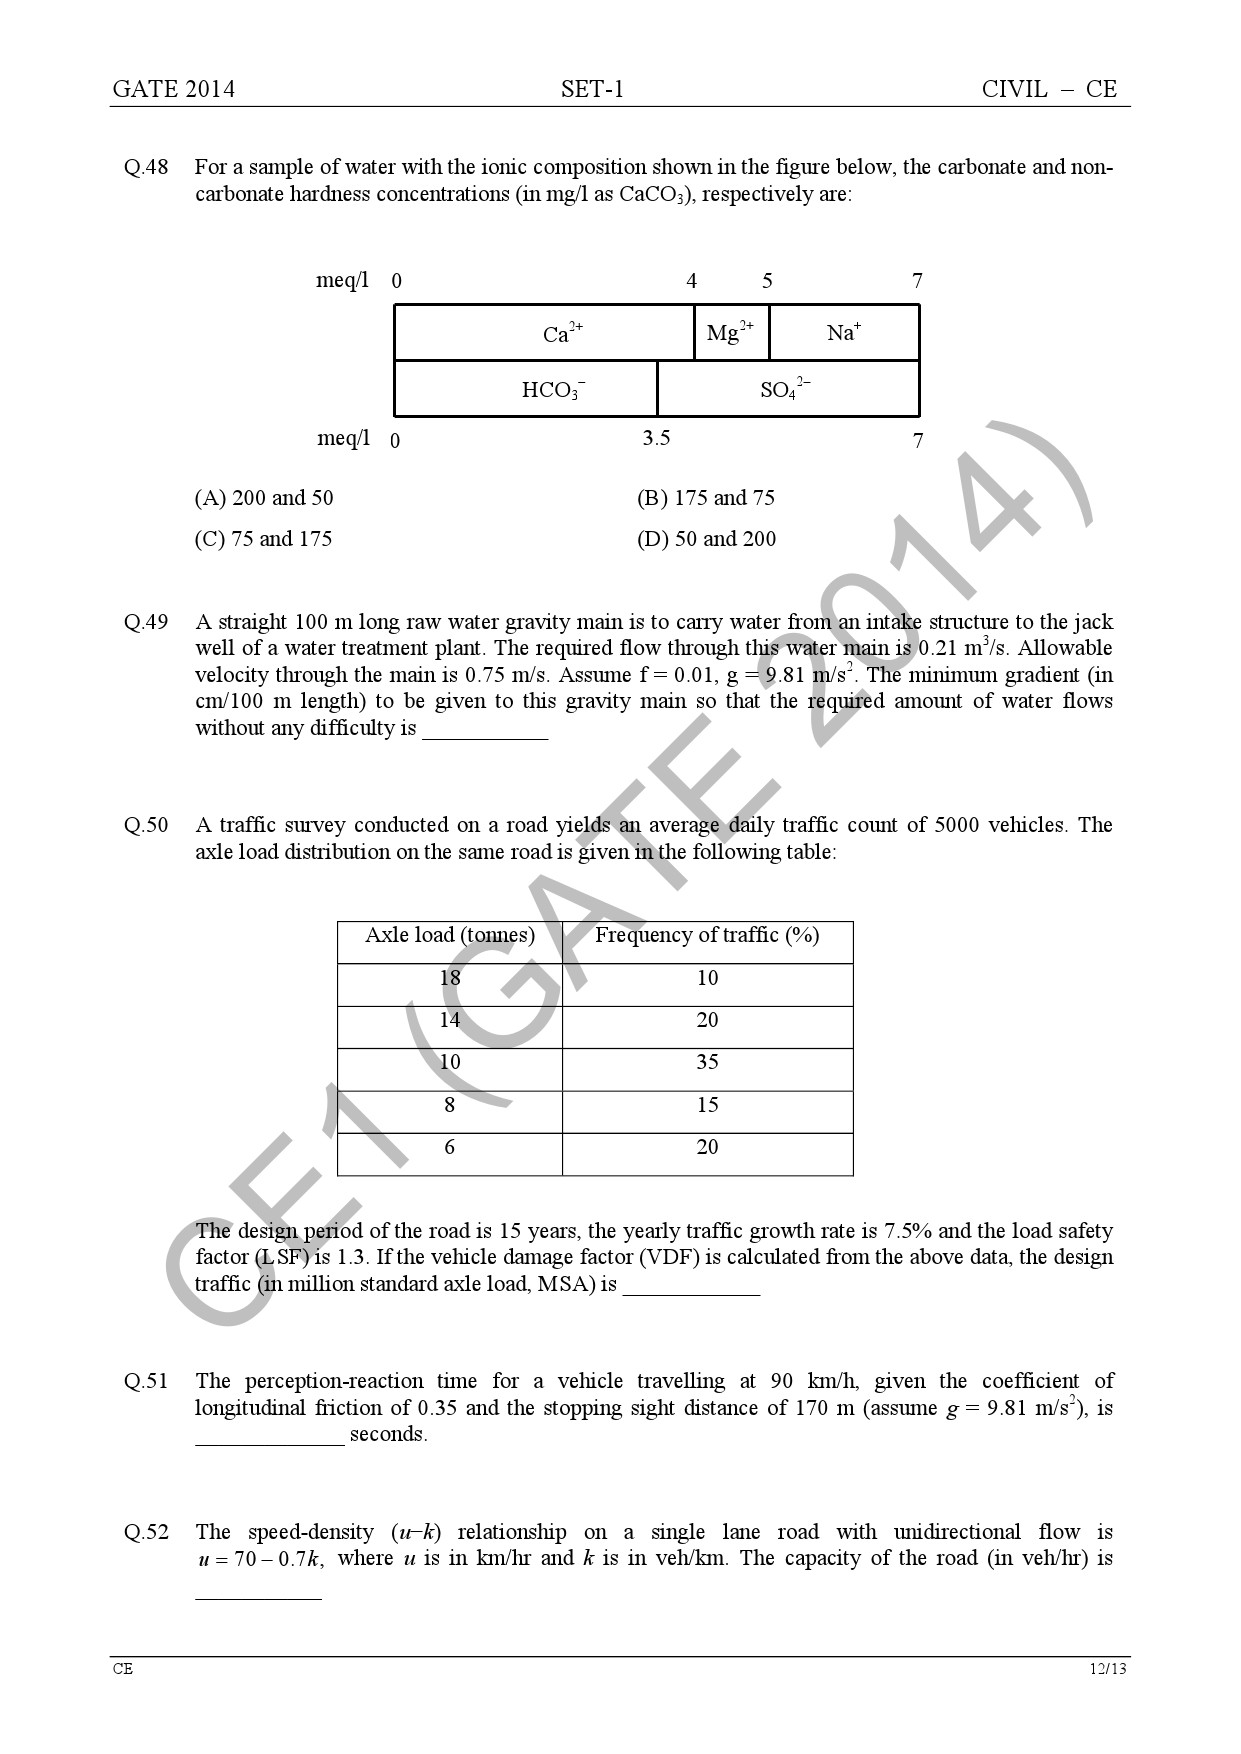 GATE Exam Question Paper 2014 Civil Engineering Set 1 18